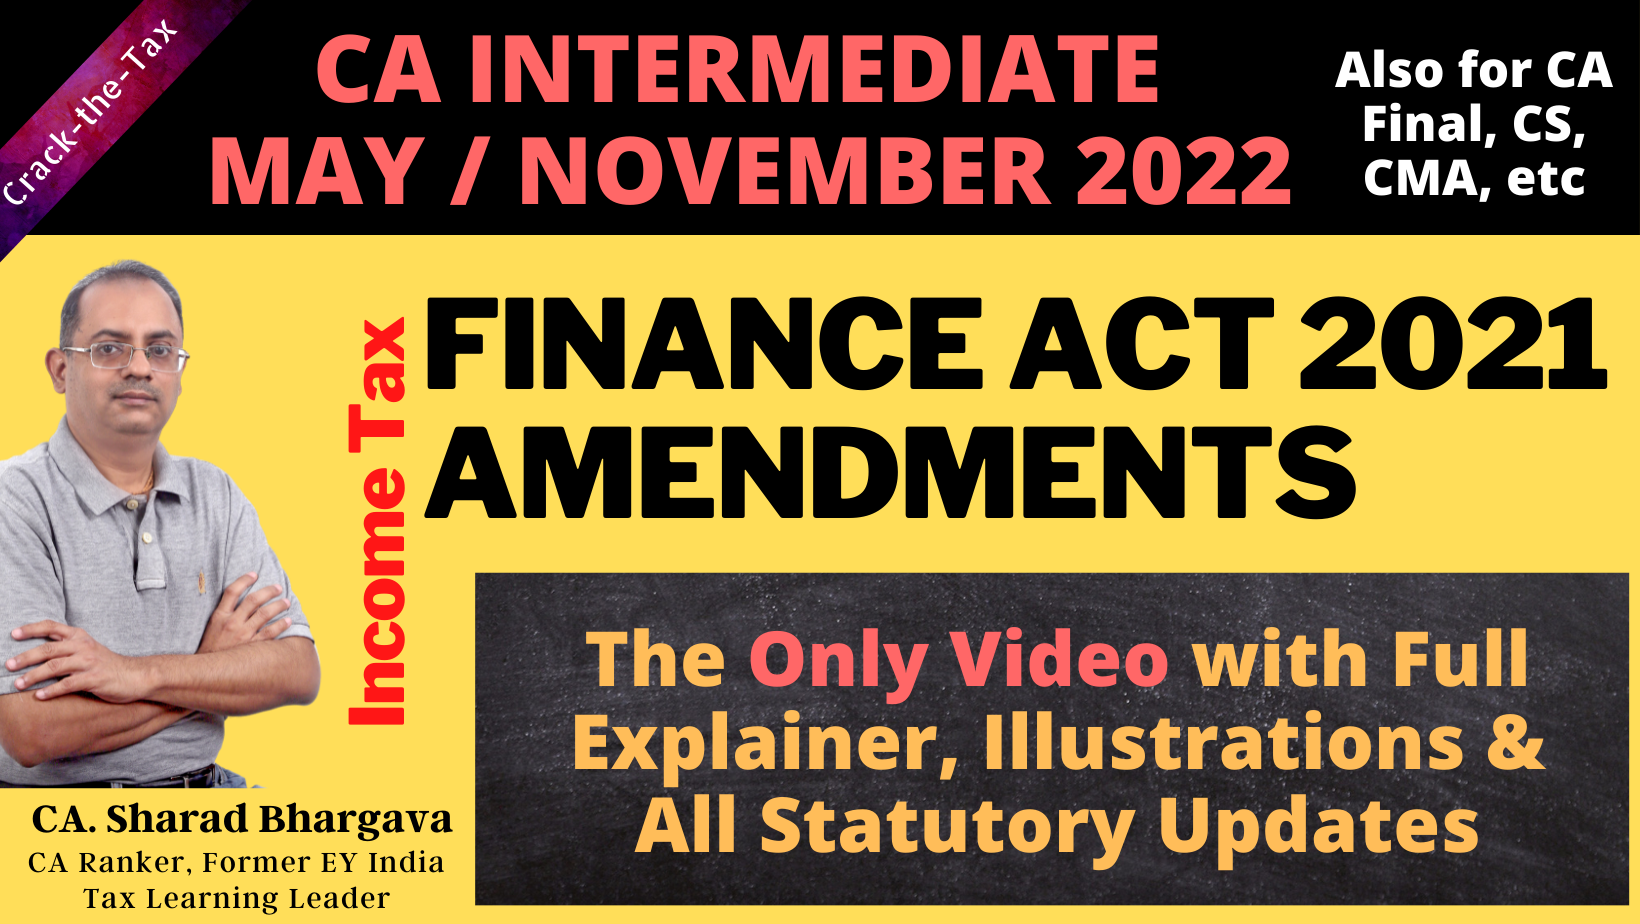 Finance Act 2021 Amendments (DT) for CA Inter May & Nov 2022